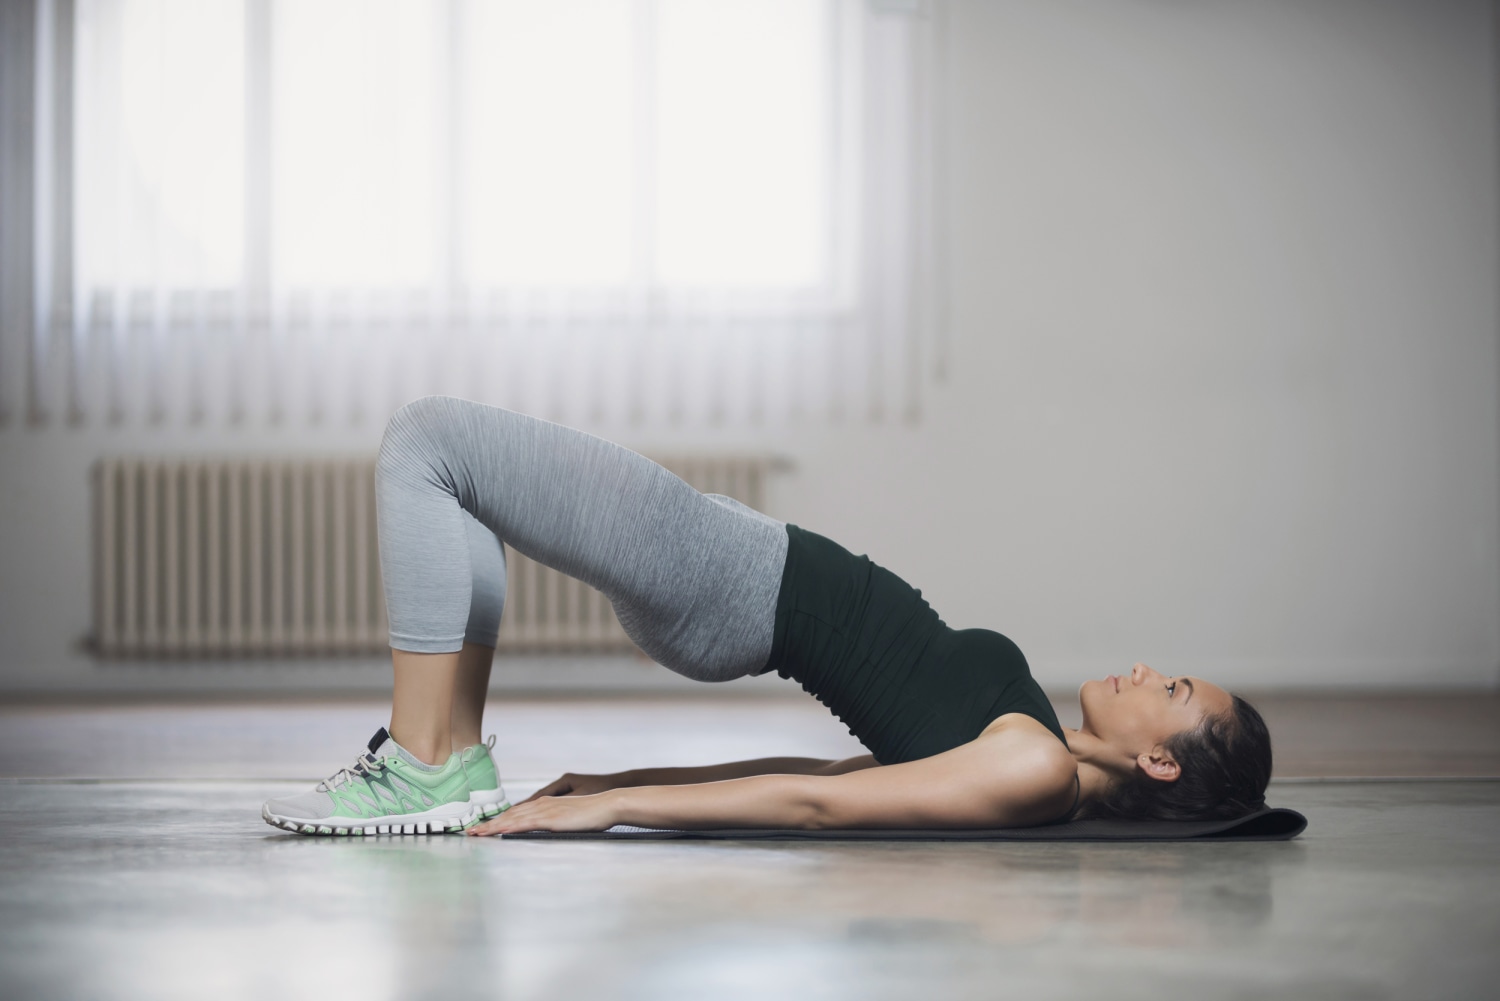 Classical pilates mat online workout: The double straight leg lower lift